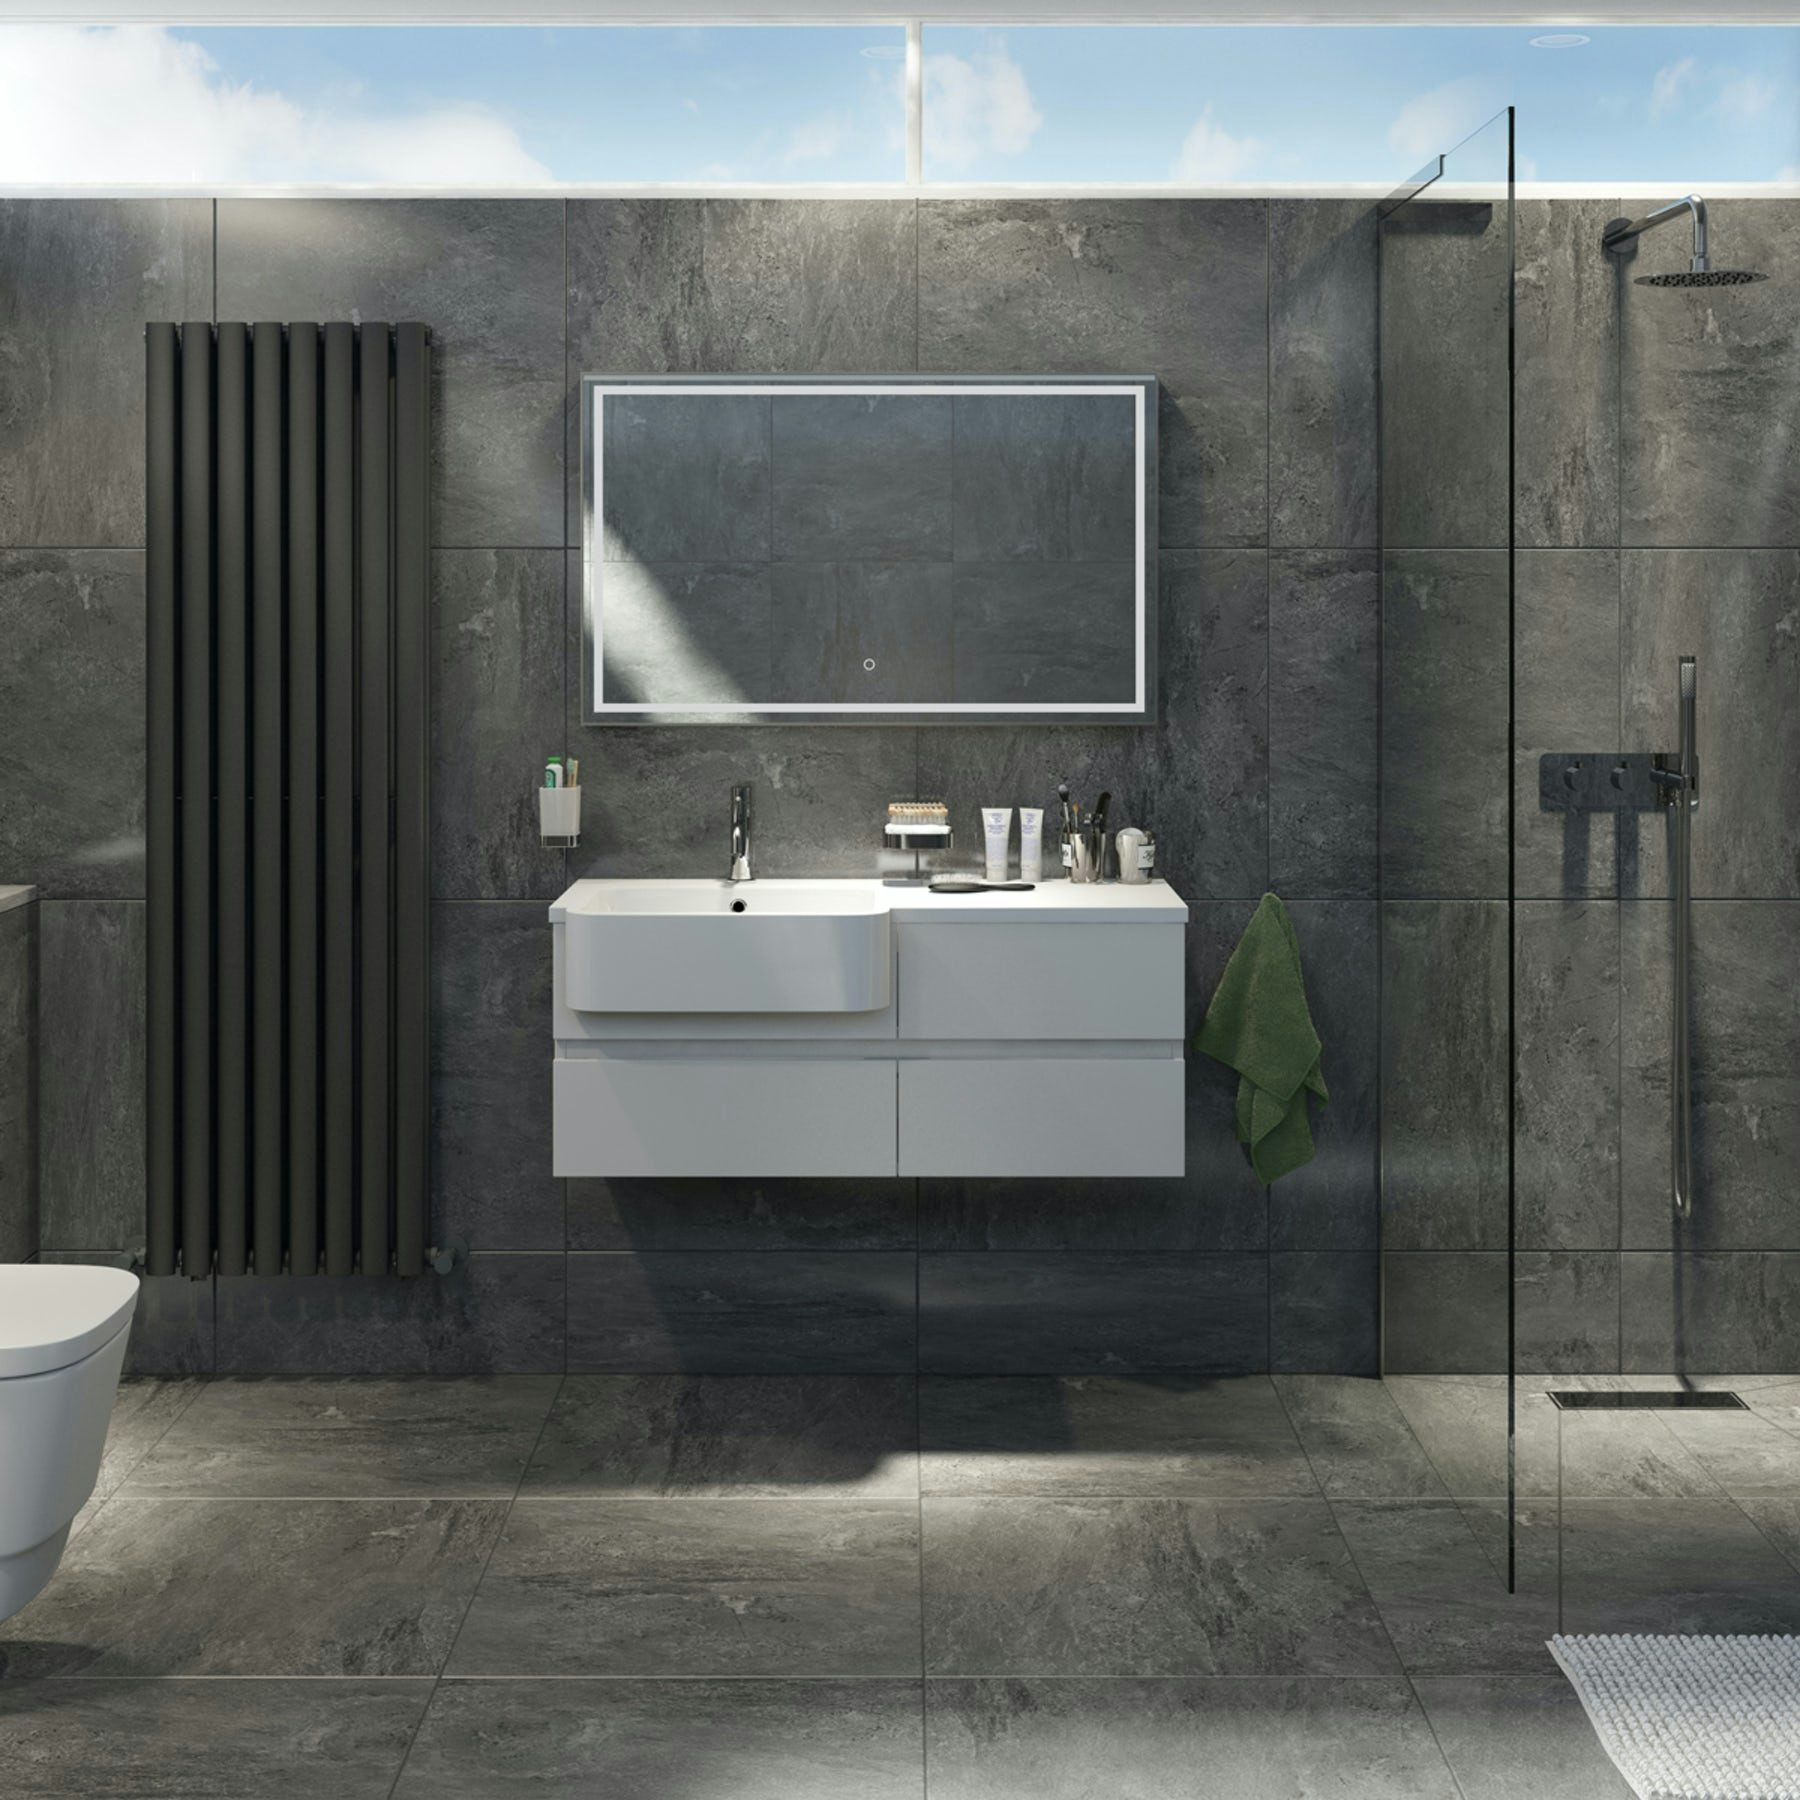 Roche bathroom furniture range